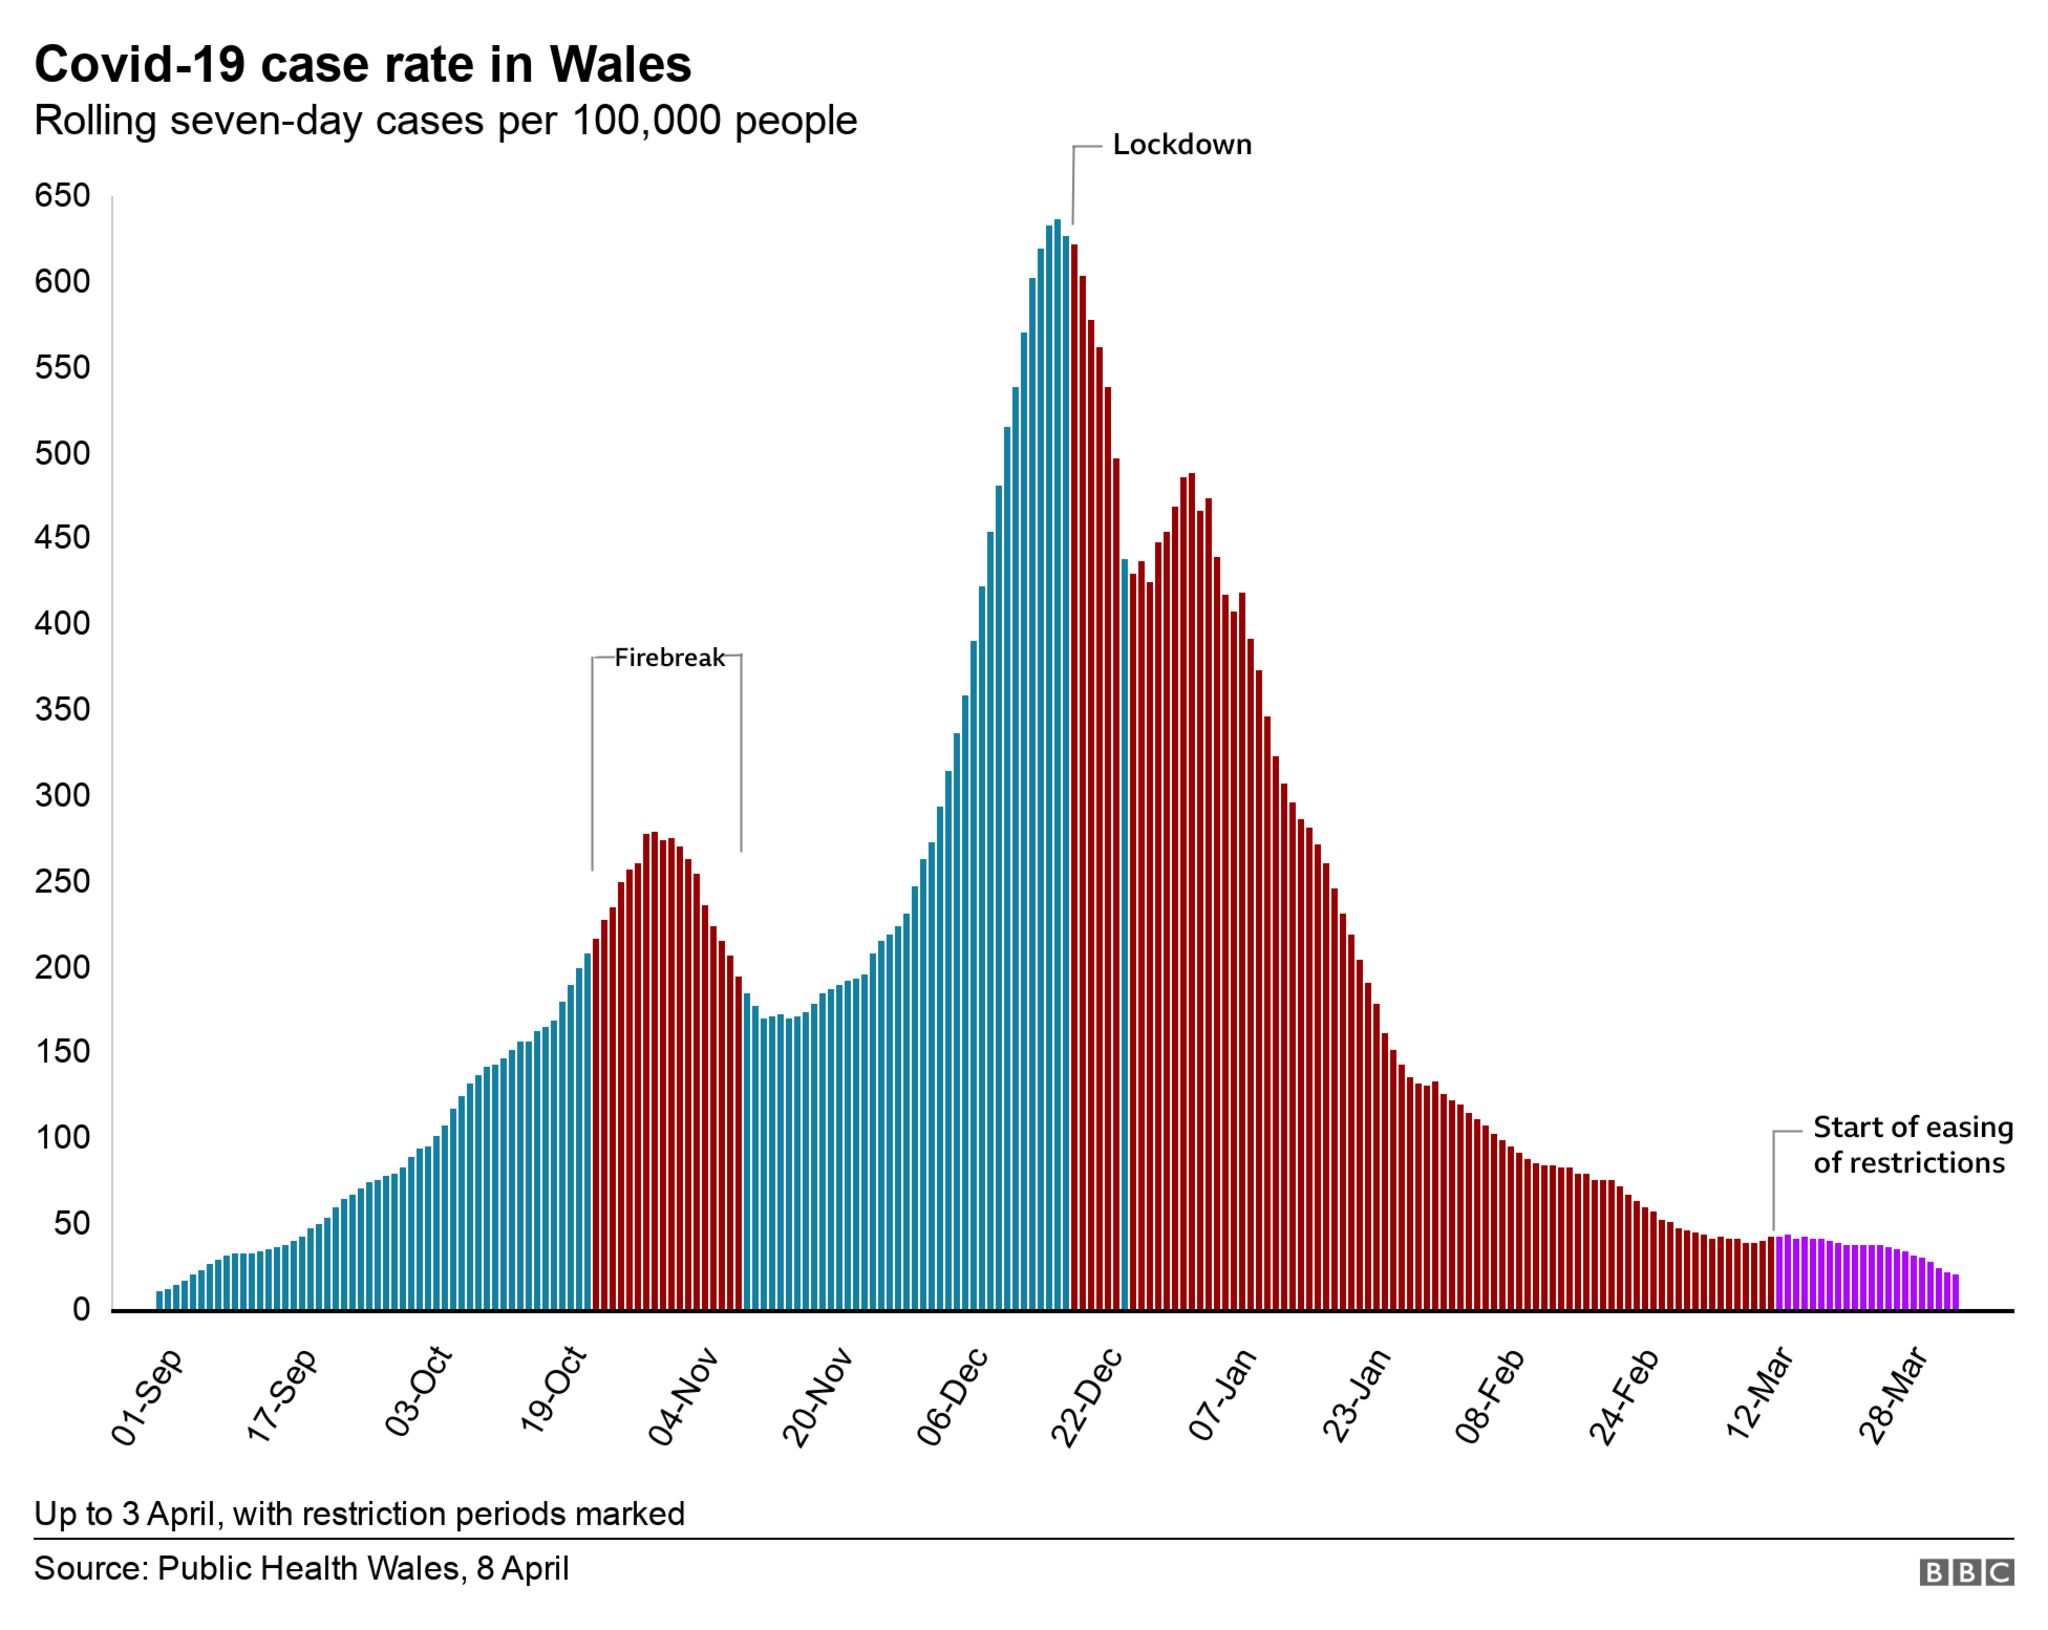 Change in rolling coronavirus case rate in Wales